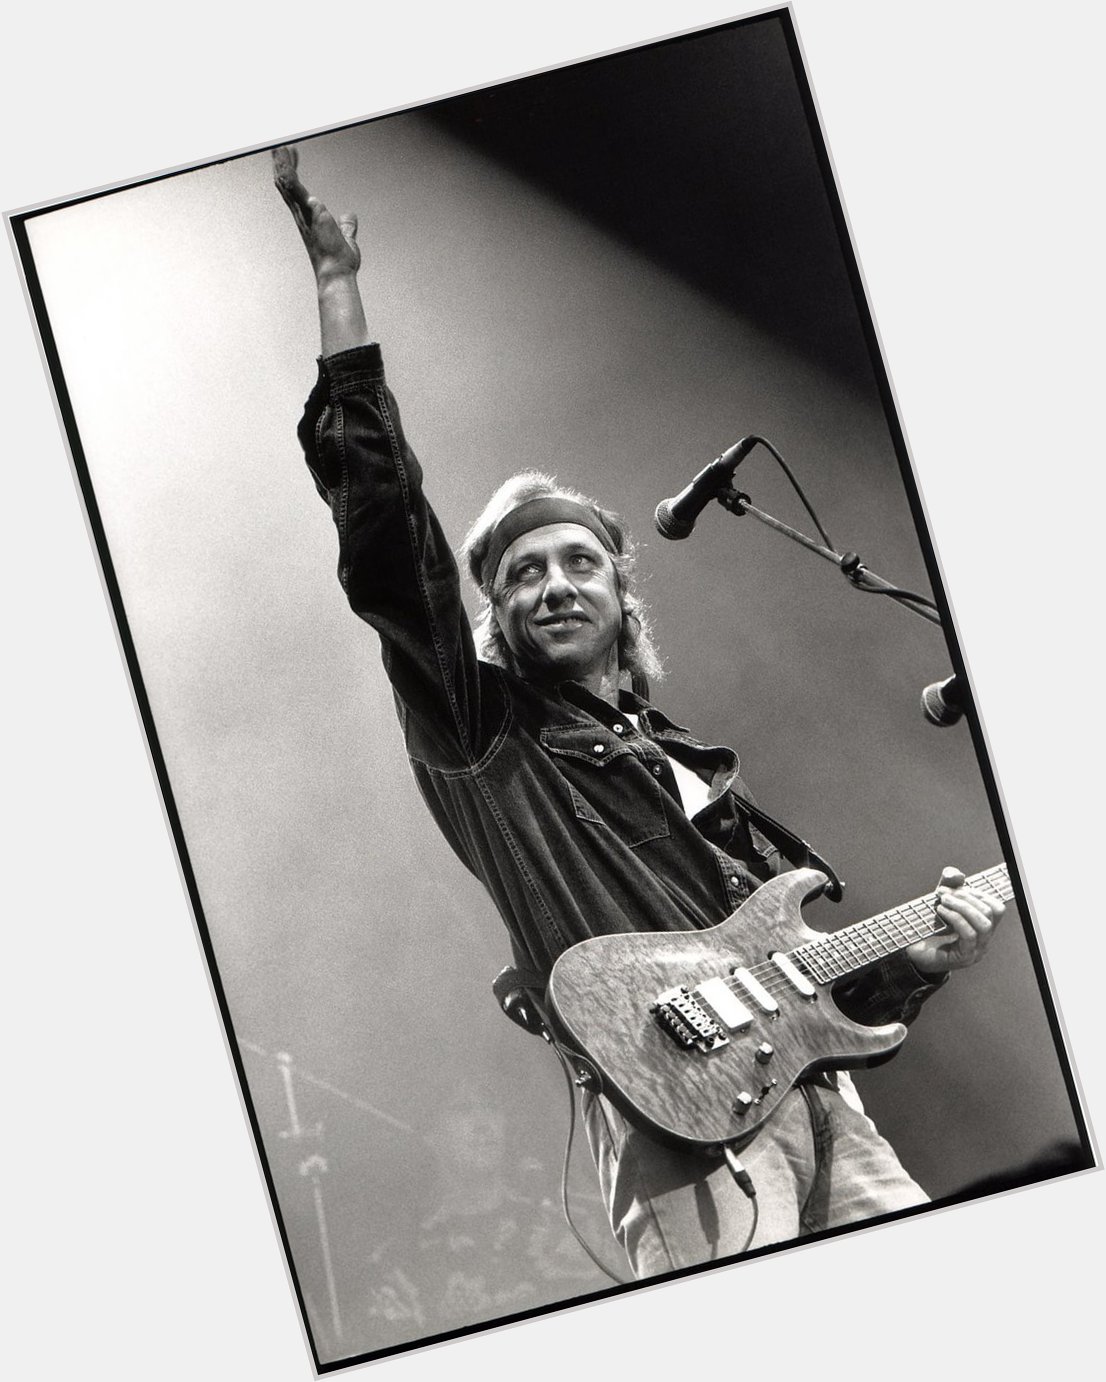 Happy birthday Mark Knopfler(Dire Straits)(born 12.8.1949)  